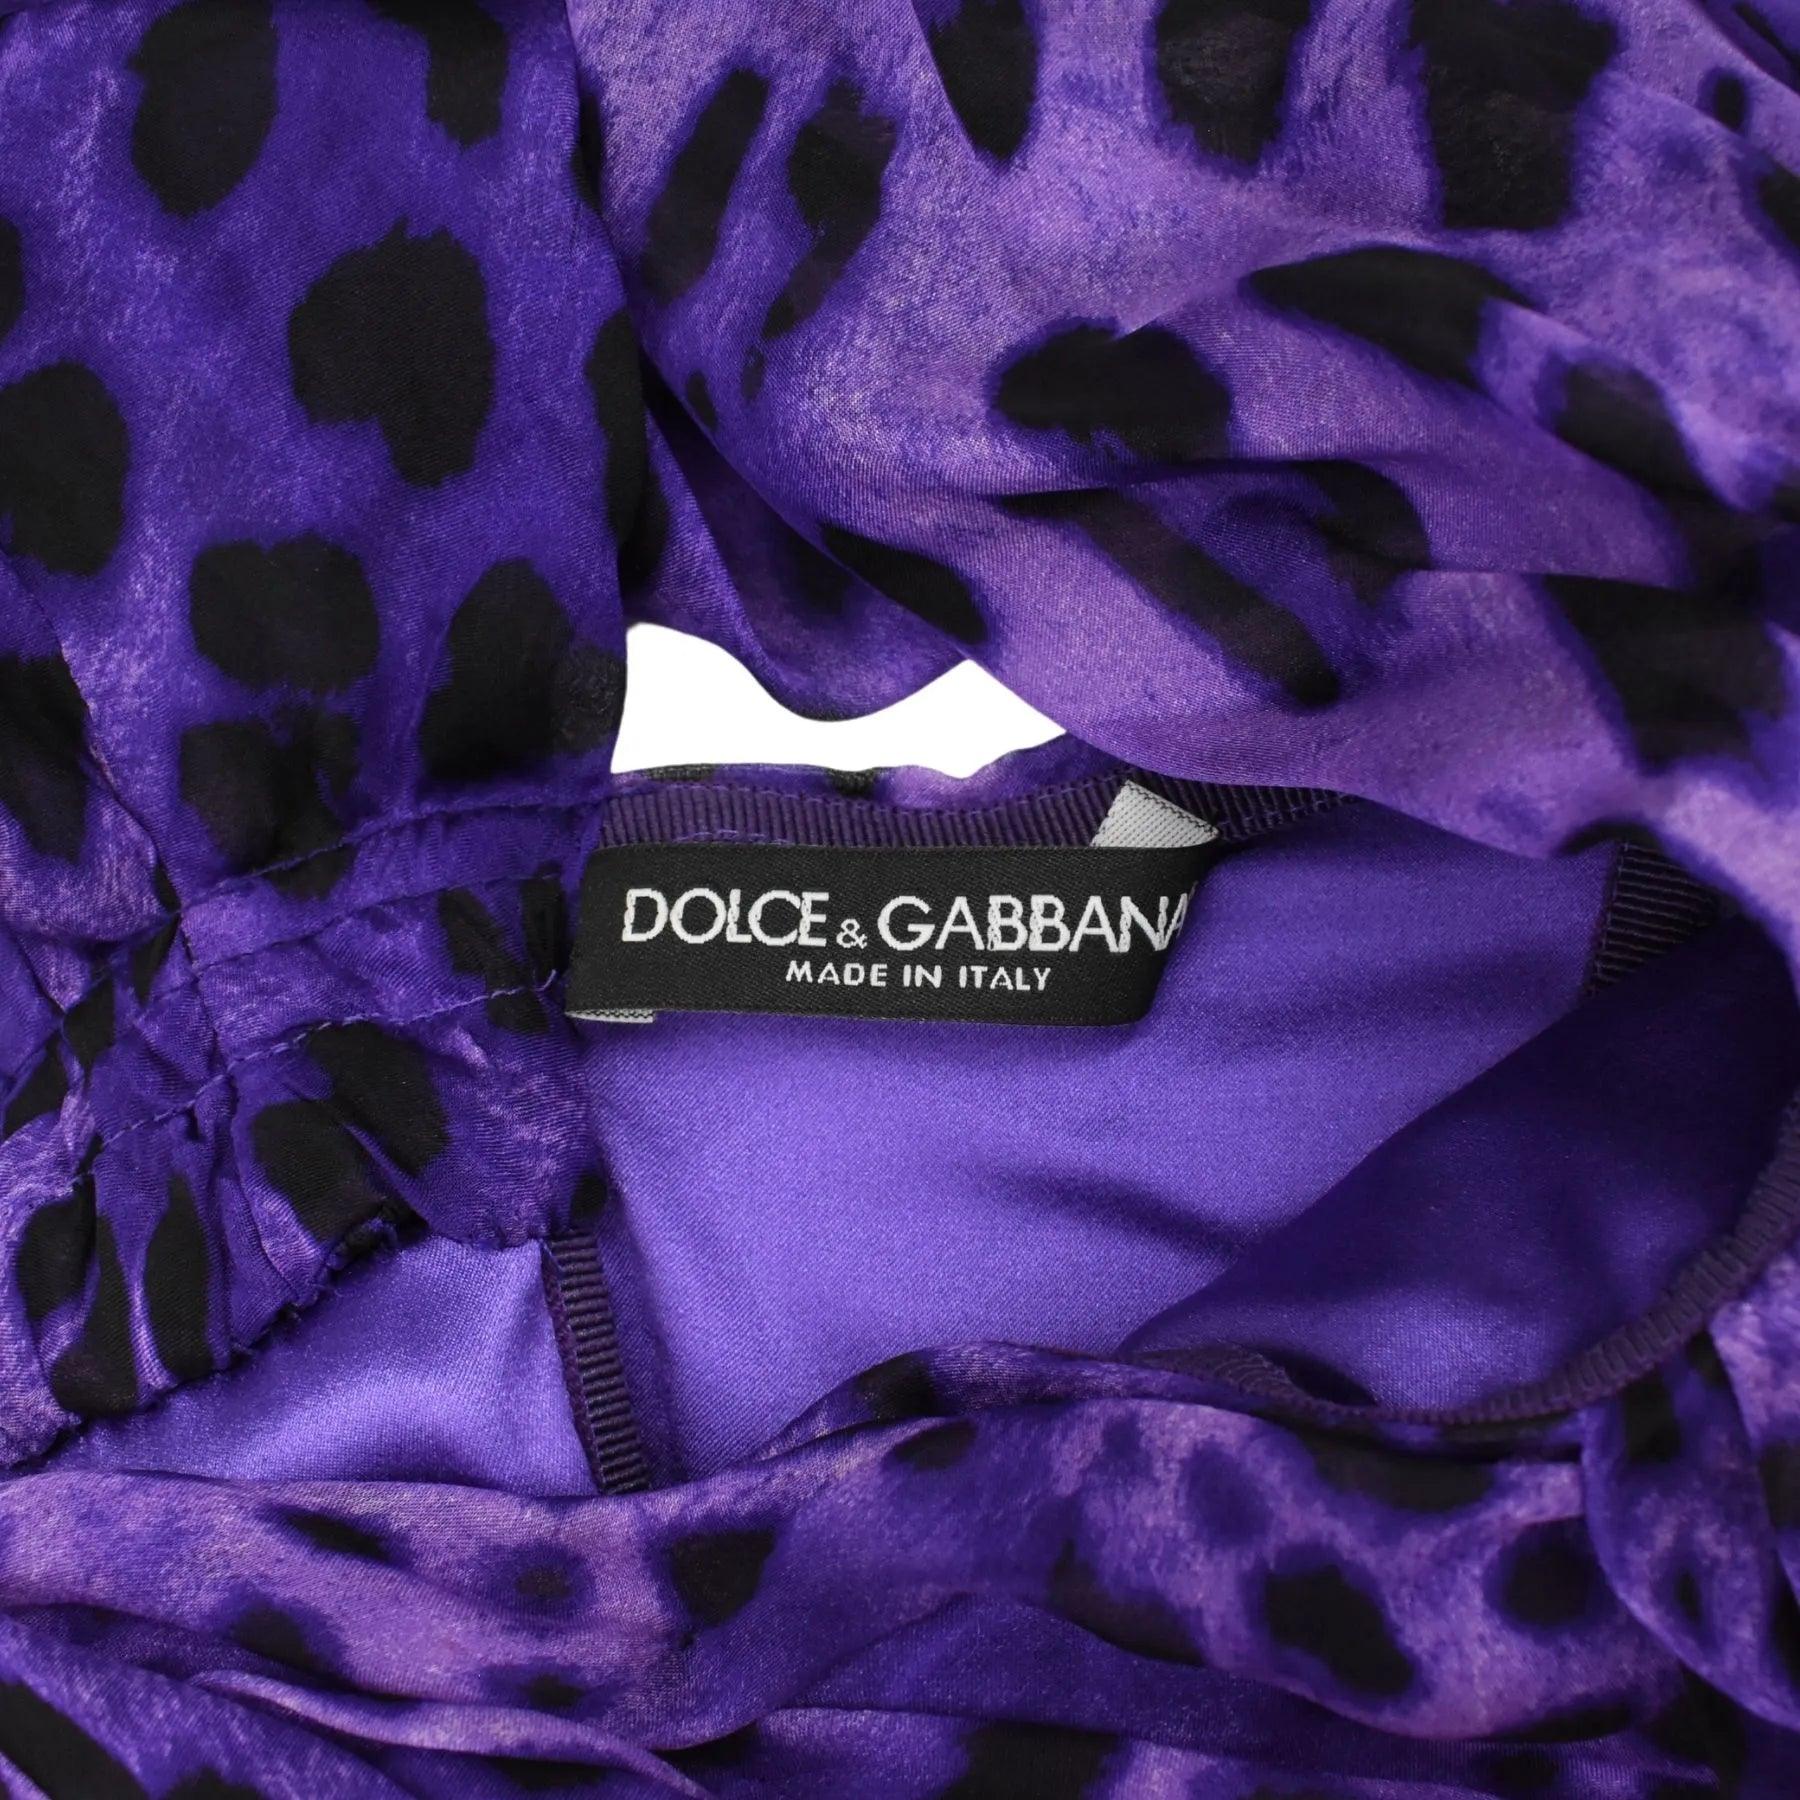 Dolce & Gabbana Bustier Dress - Women's 42 - Fashionably Yours